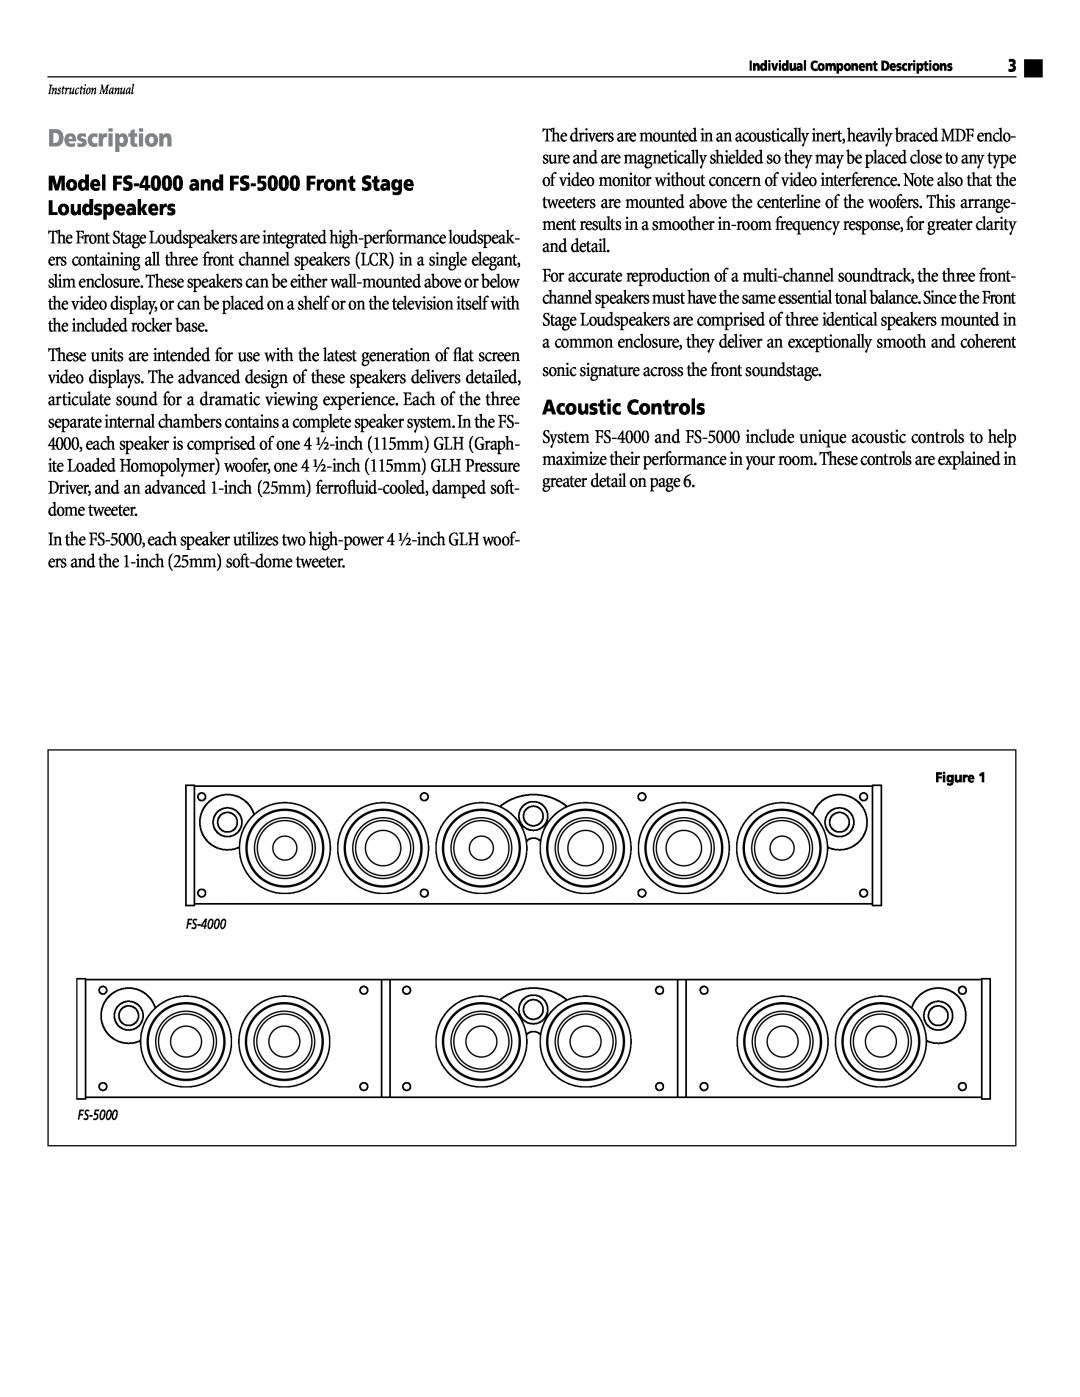 Atlantic Technology instruction manual Description, Model FS-4000and FS-5000Front Stage Loudspeakers, Acoustic Controls 